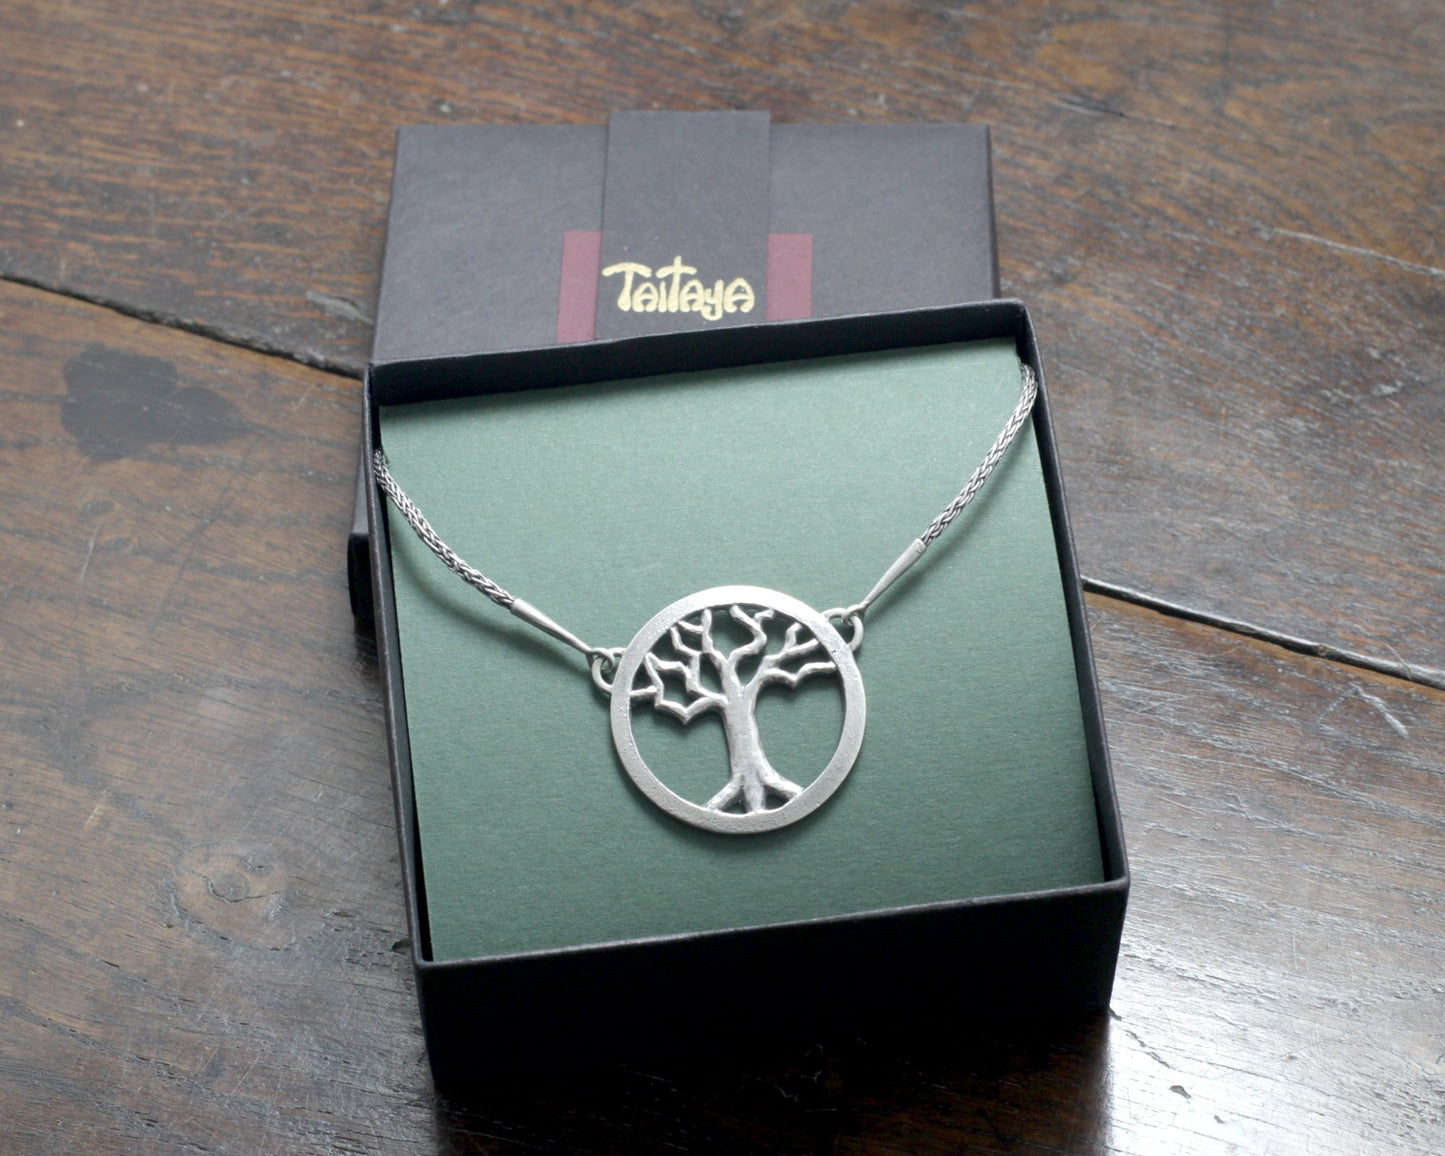 Silver Yggdrasil Tree Necklace by Taitaya Forge, Design by Marleena Barran - gift box